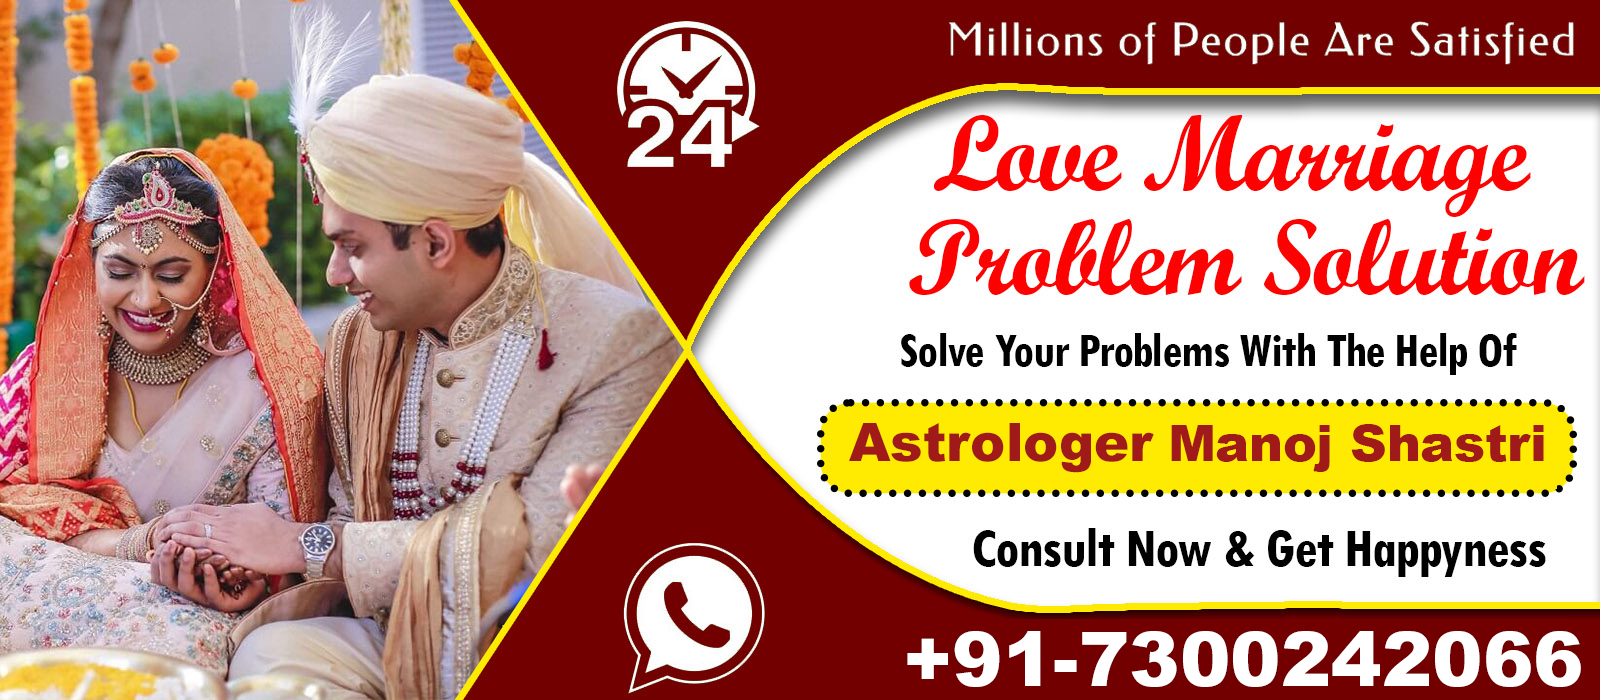 Astrologer Manoj Shastri  +91-7300242066